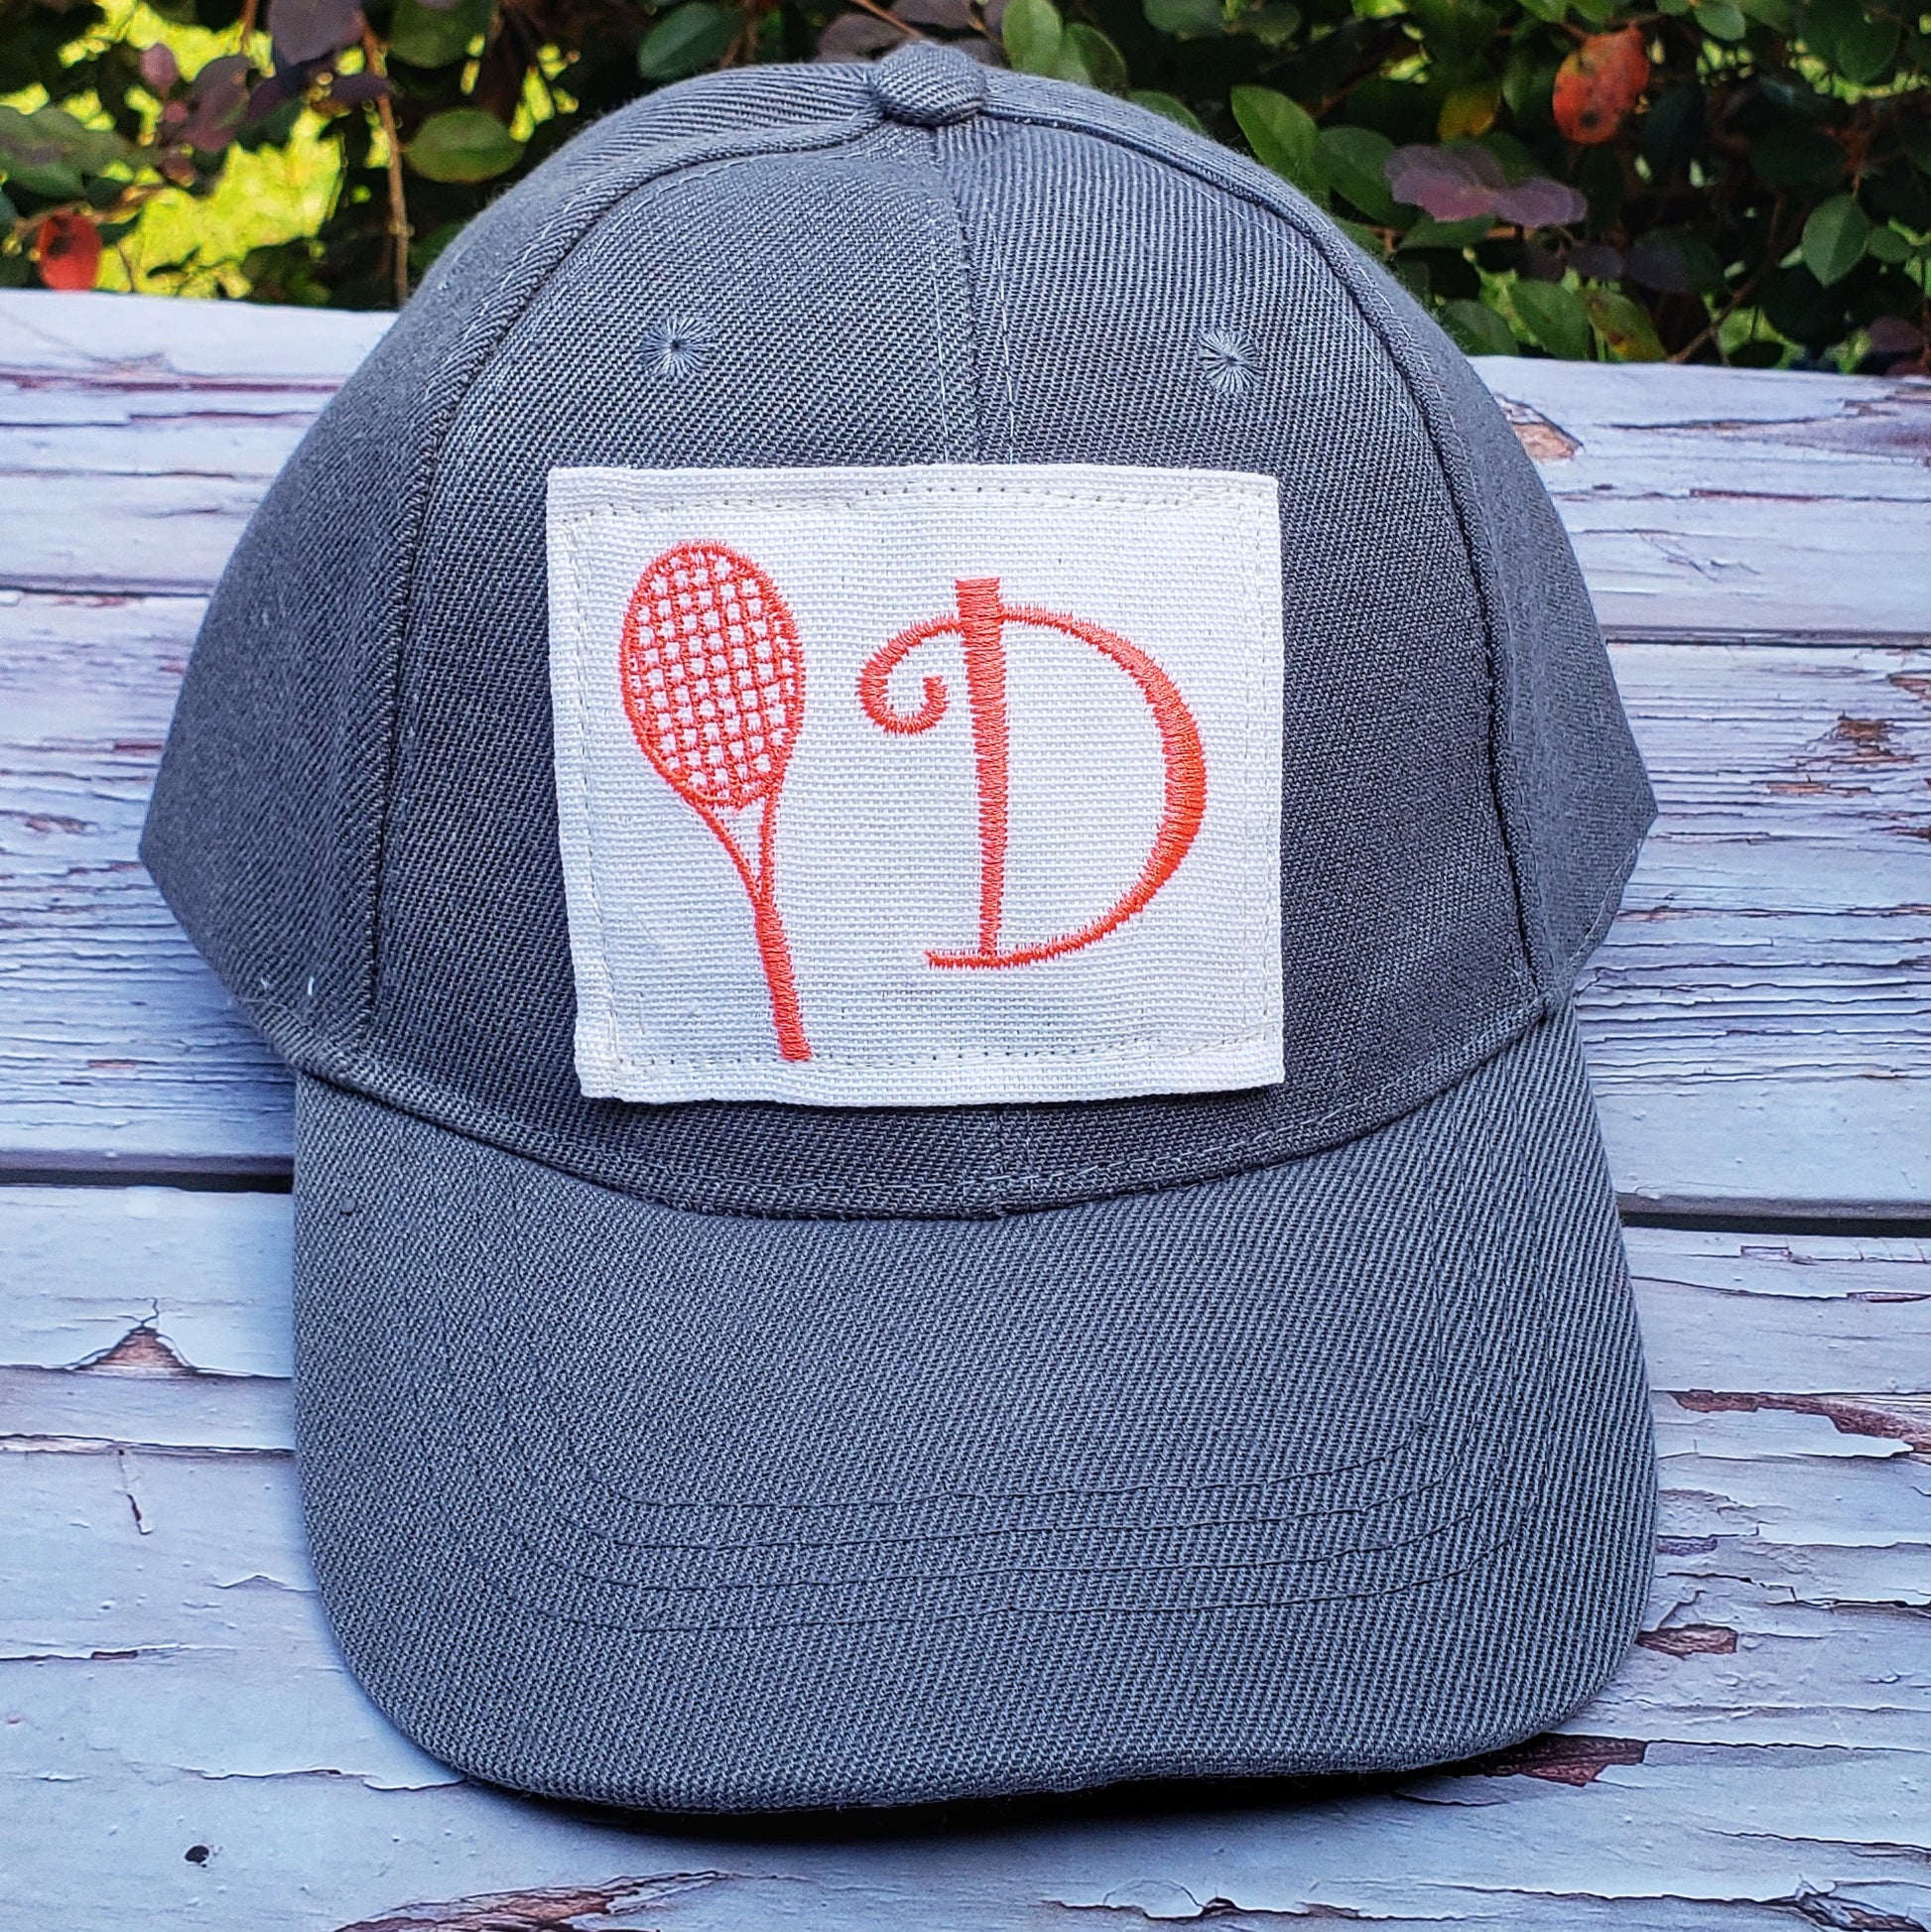 tennis cap with Initial